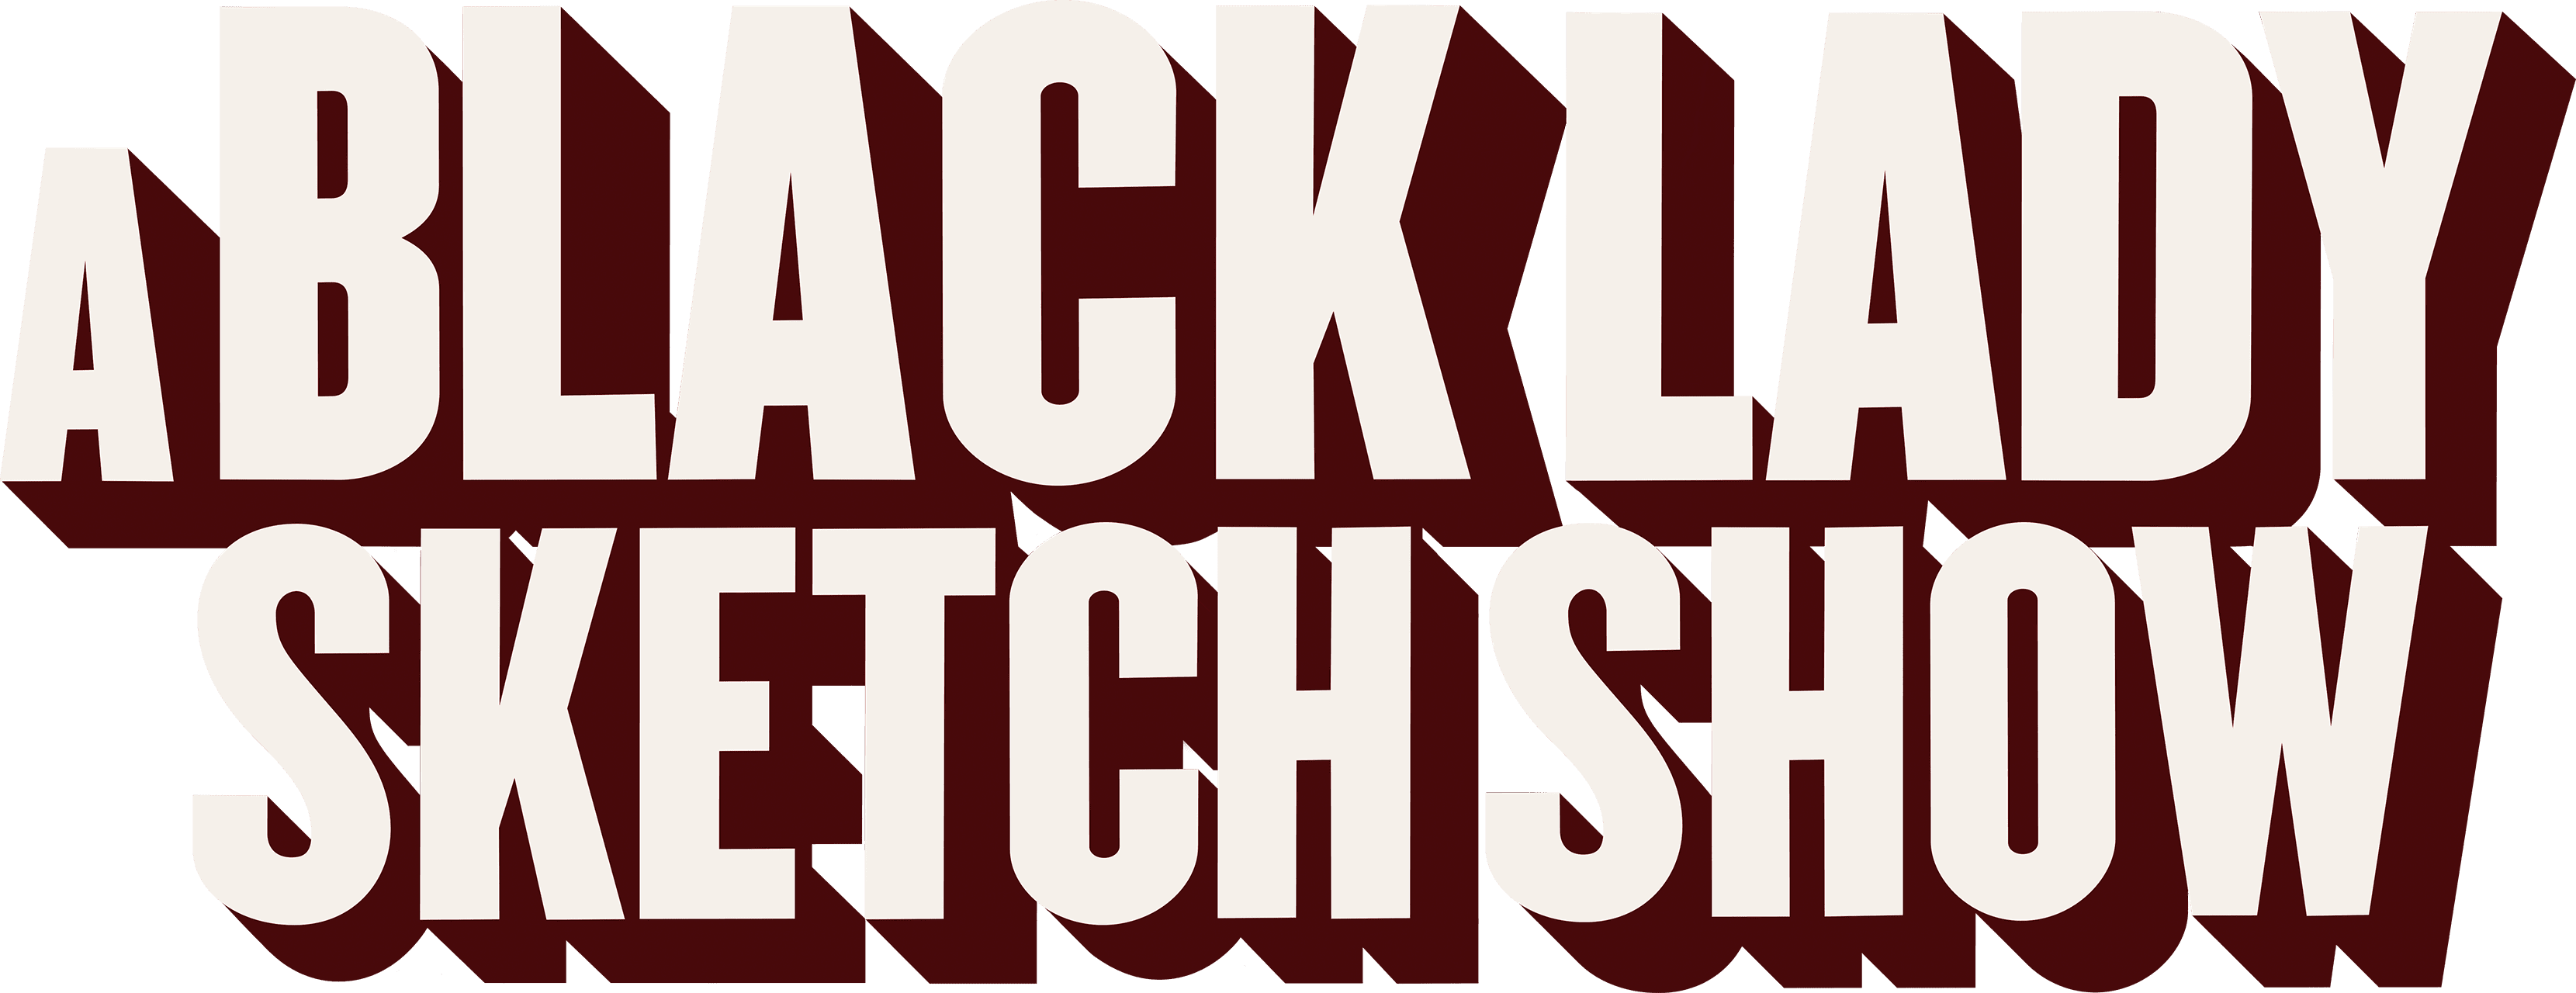 A Black Lady Sketch Show logo